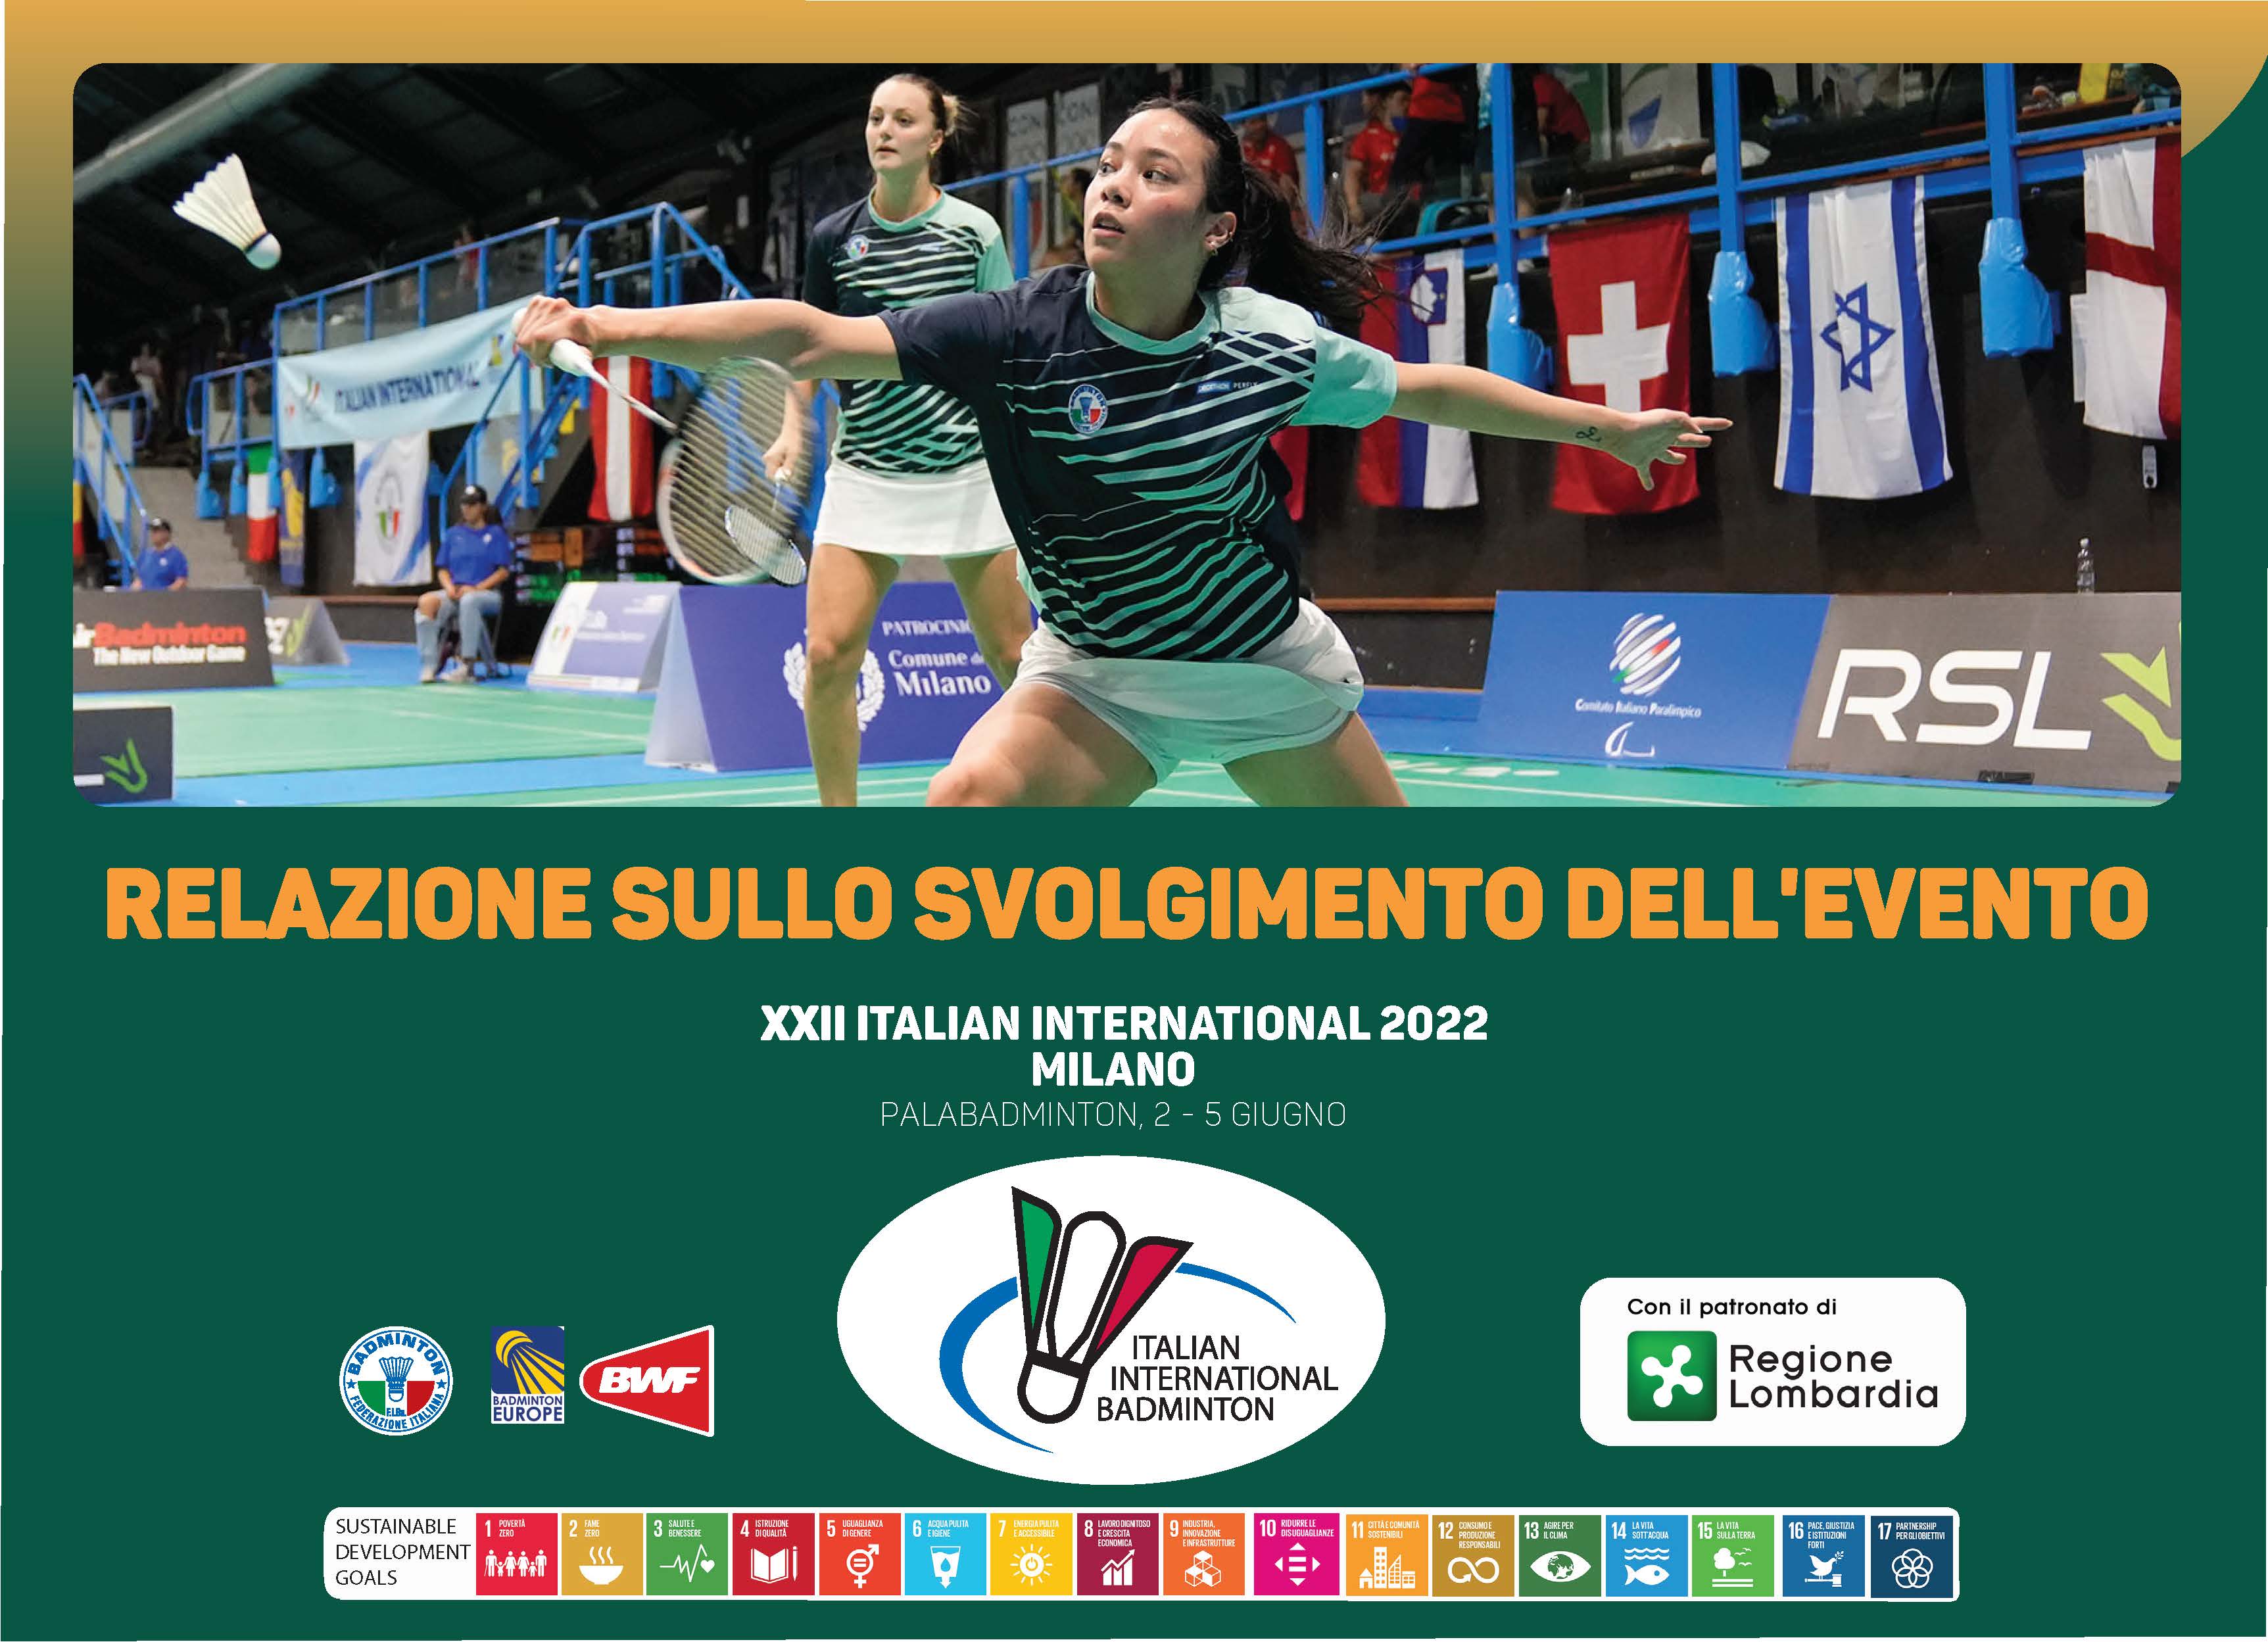 Italian internationa 2022 report